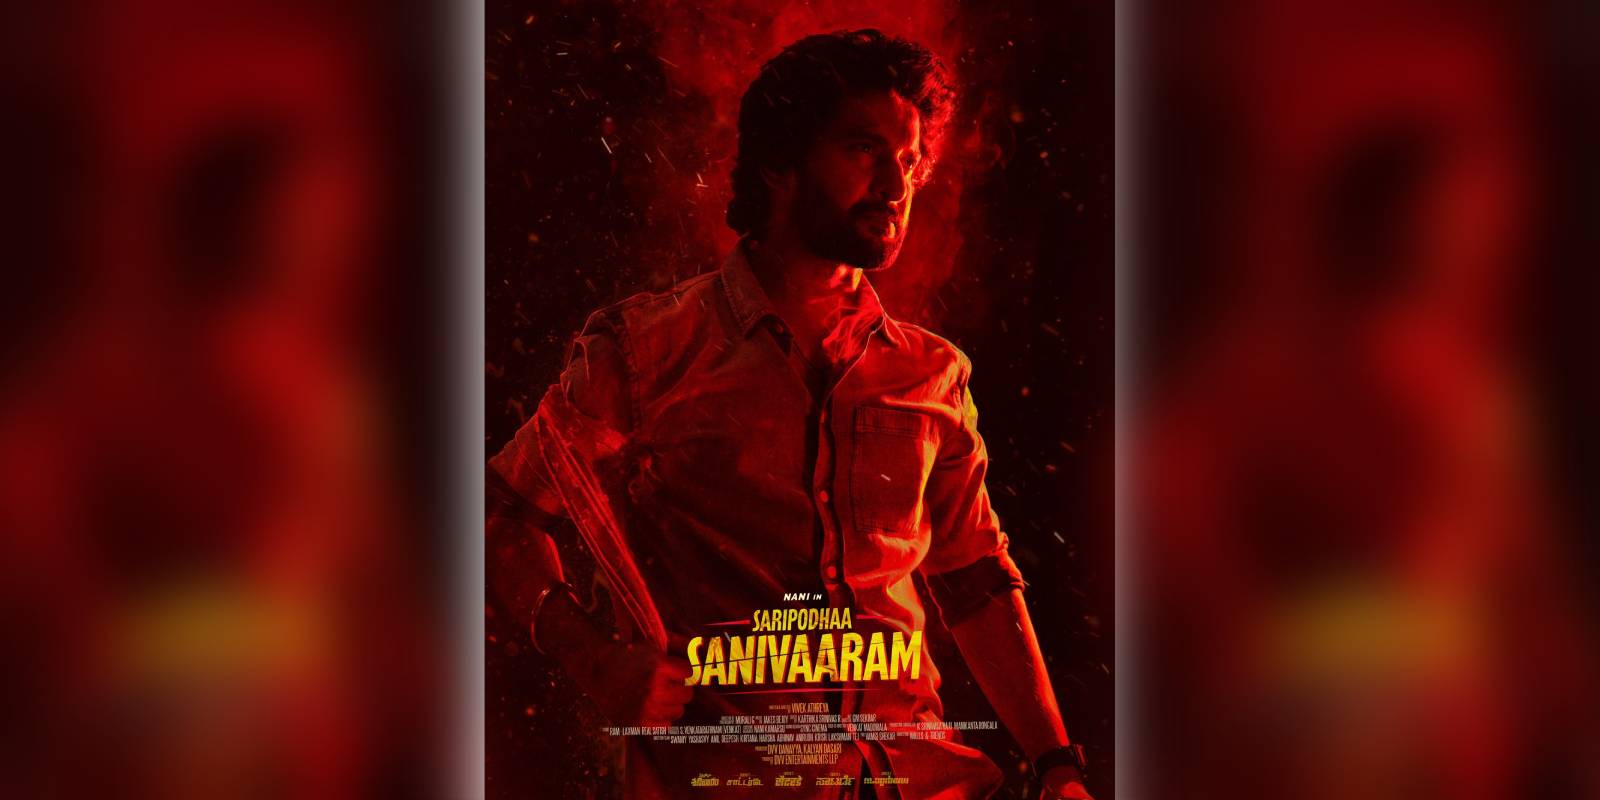 Telugu actor Nani’s first look from ‘Saripodhaa Sanivaaram’ released